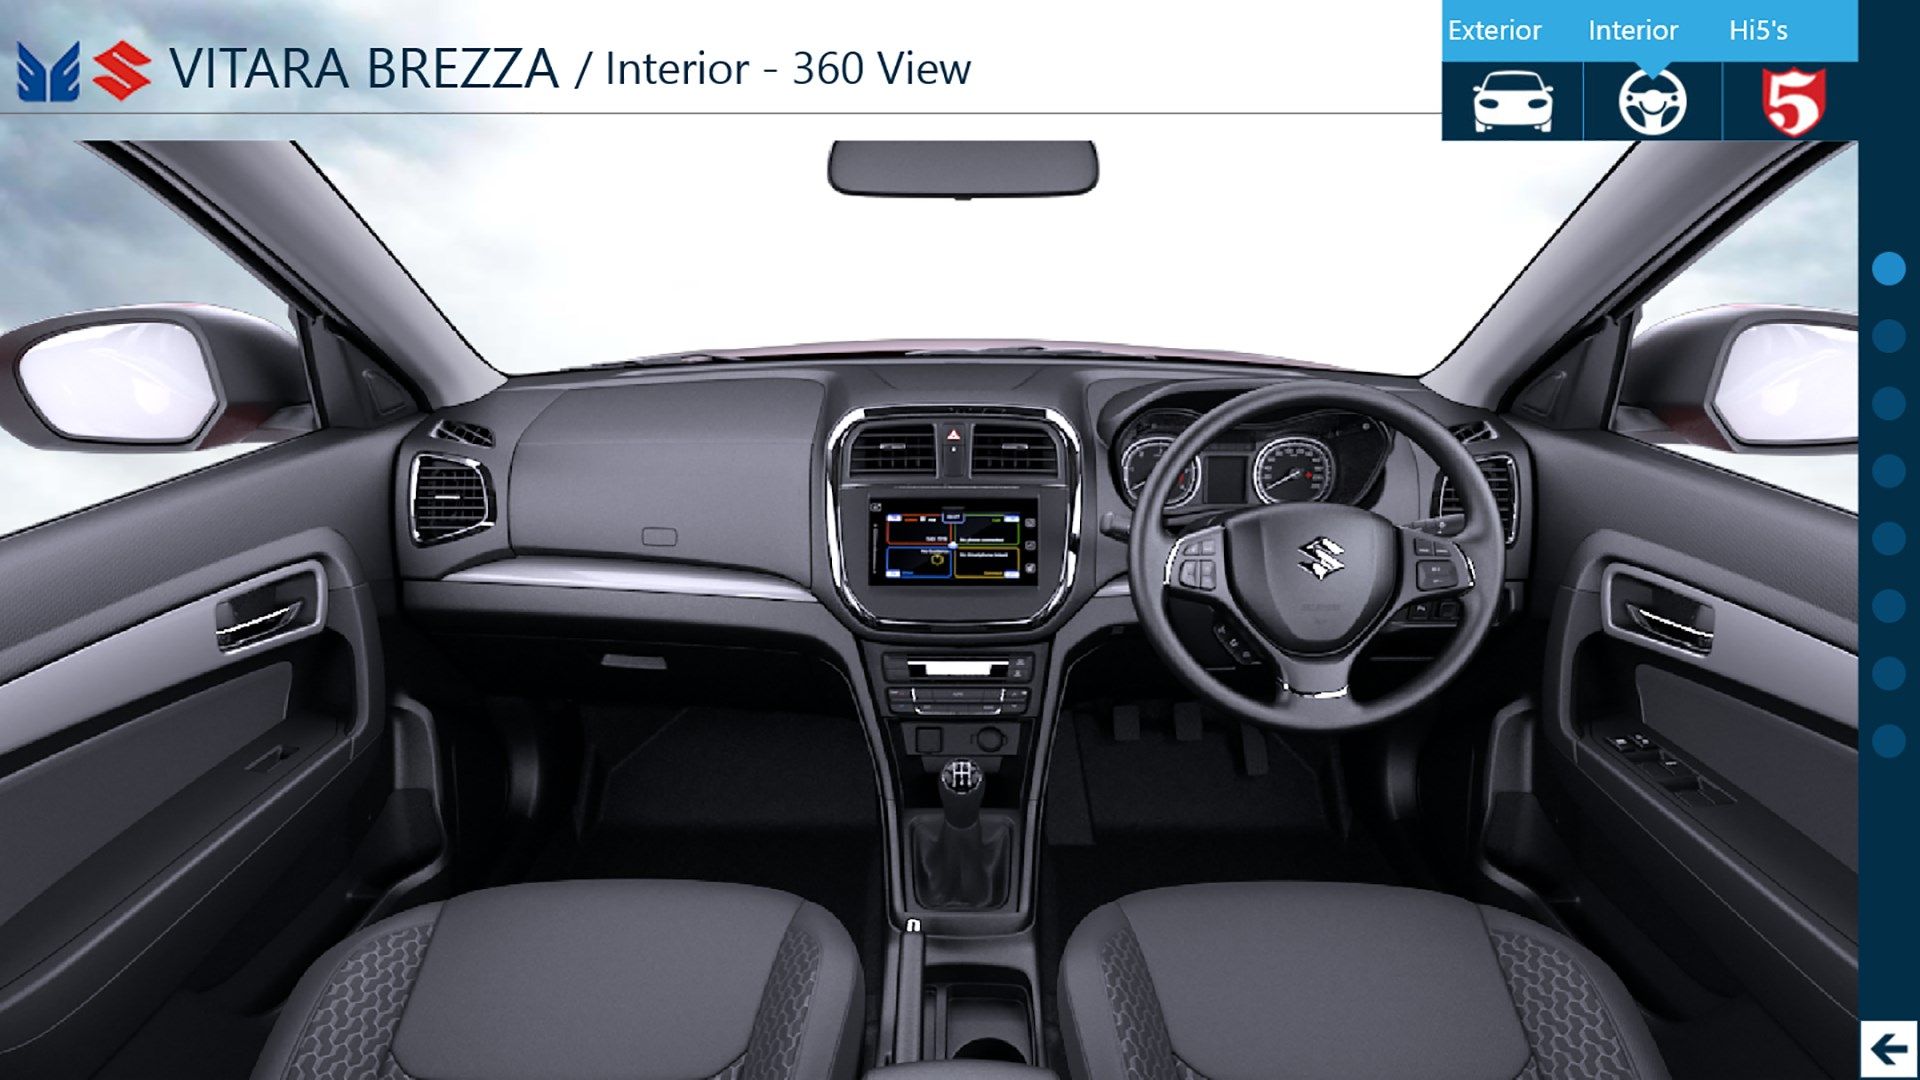 Selected Car - Interior 360 View.